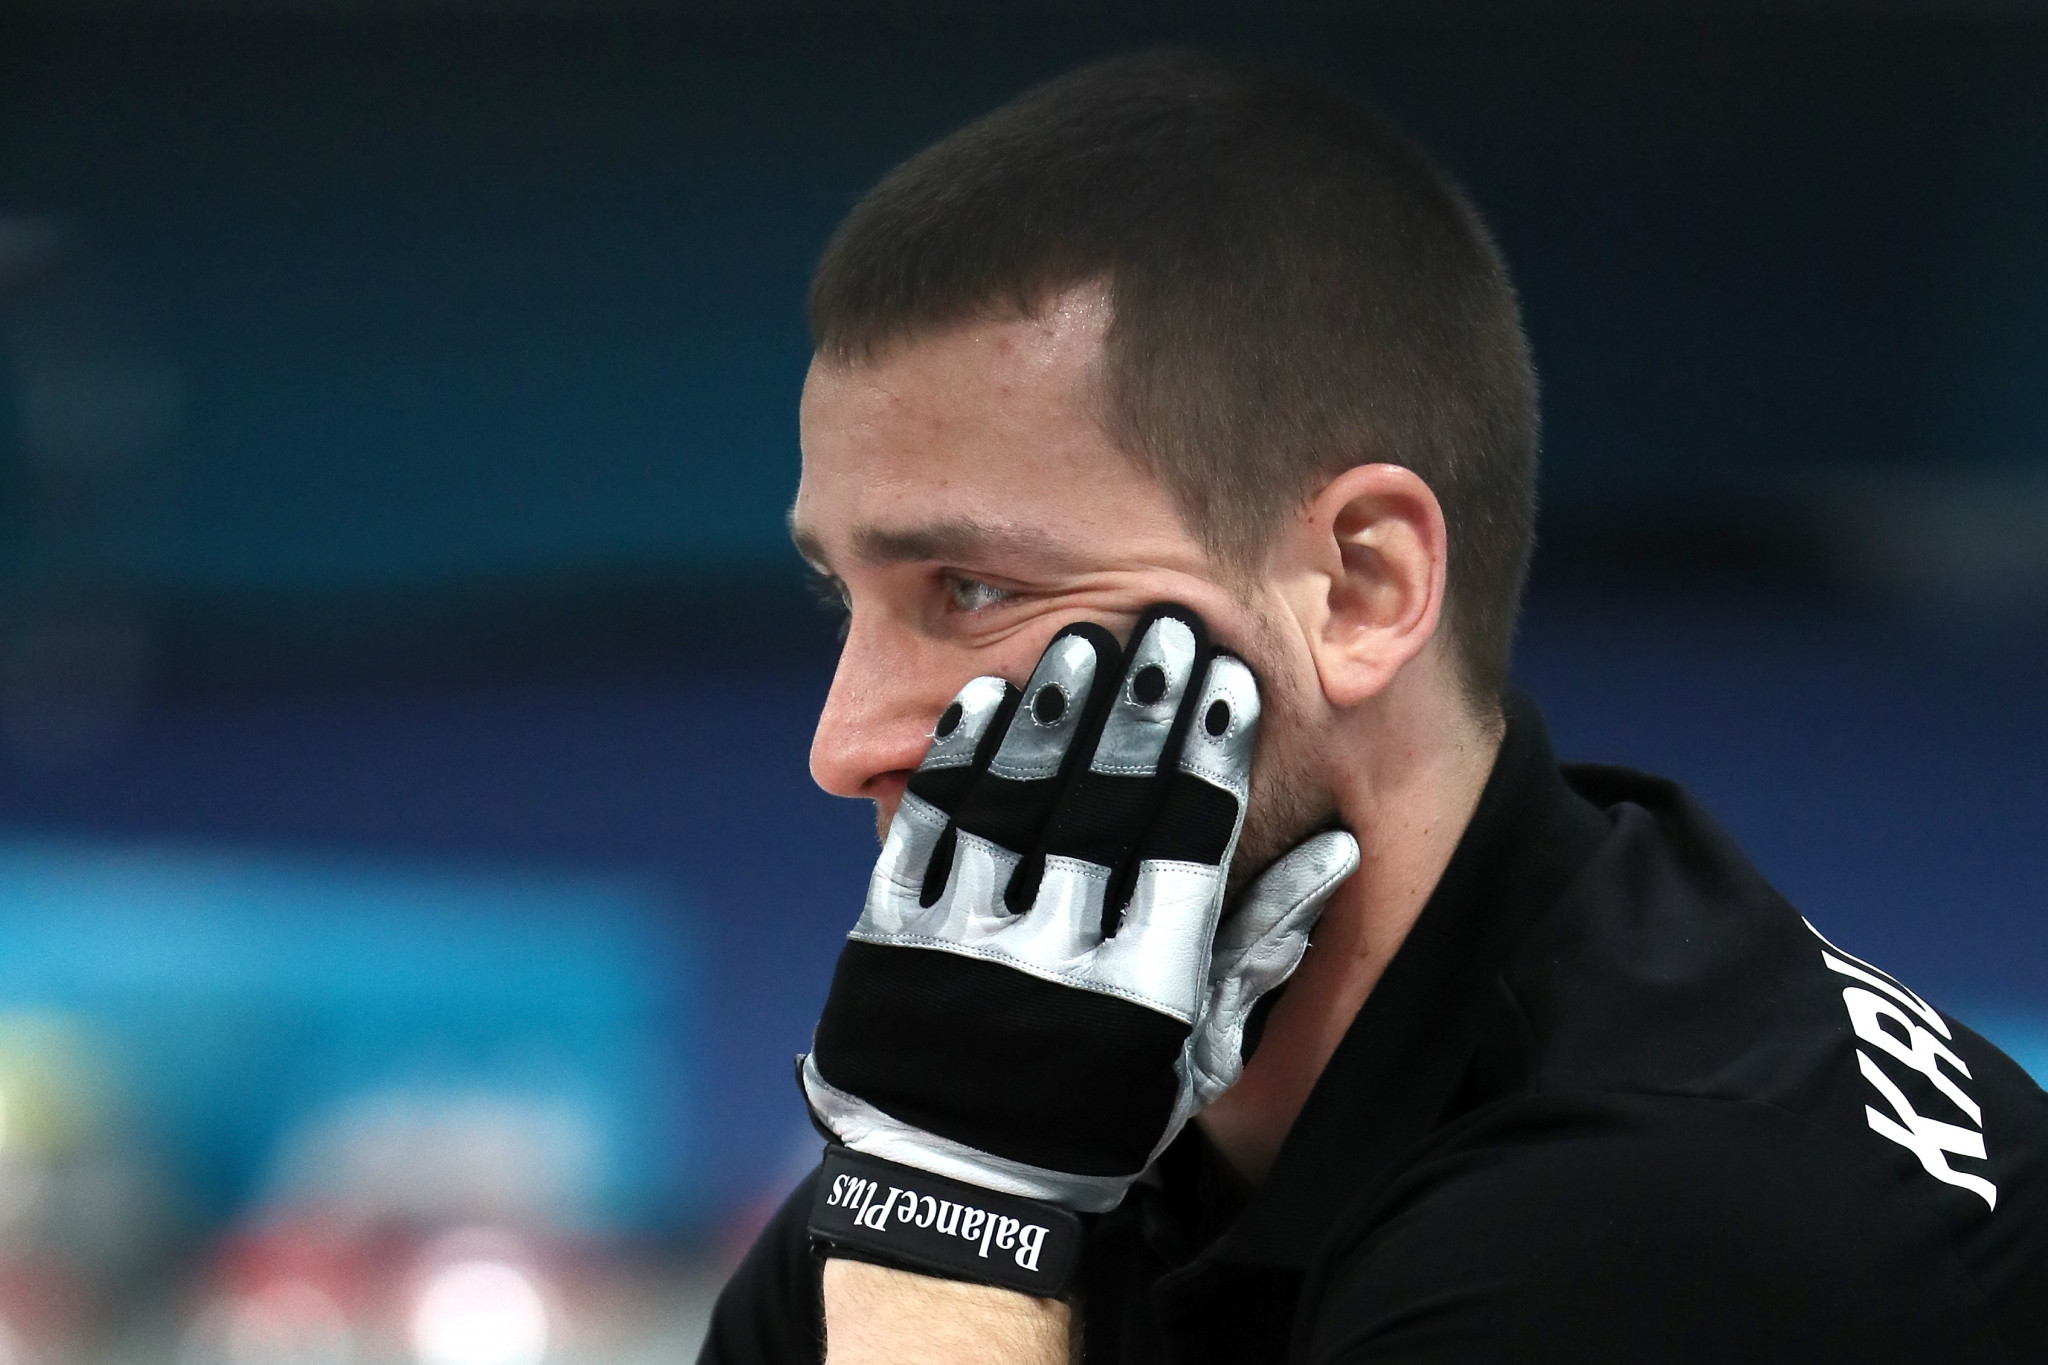 Aleksandr Krushelnitckii's four-year doping ban ended last month ©Getty Images